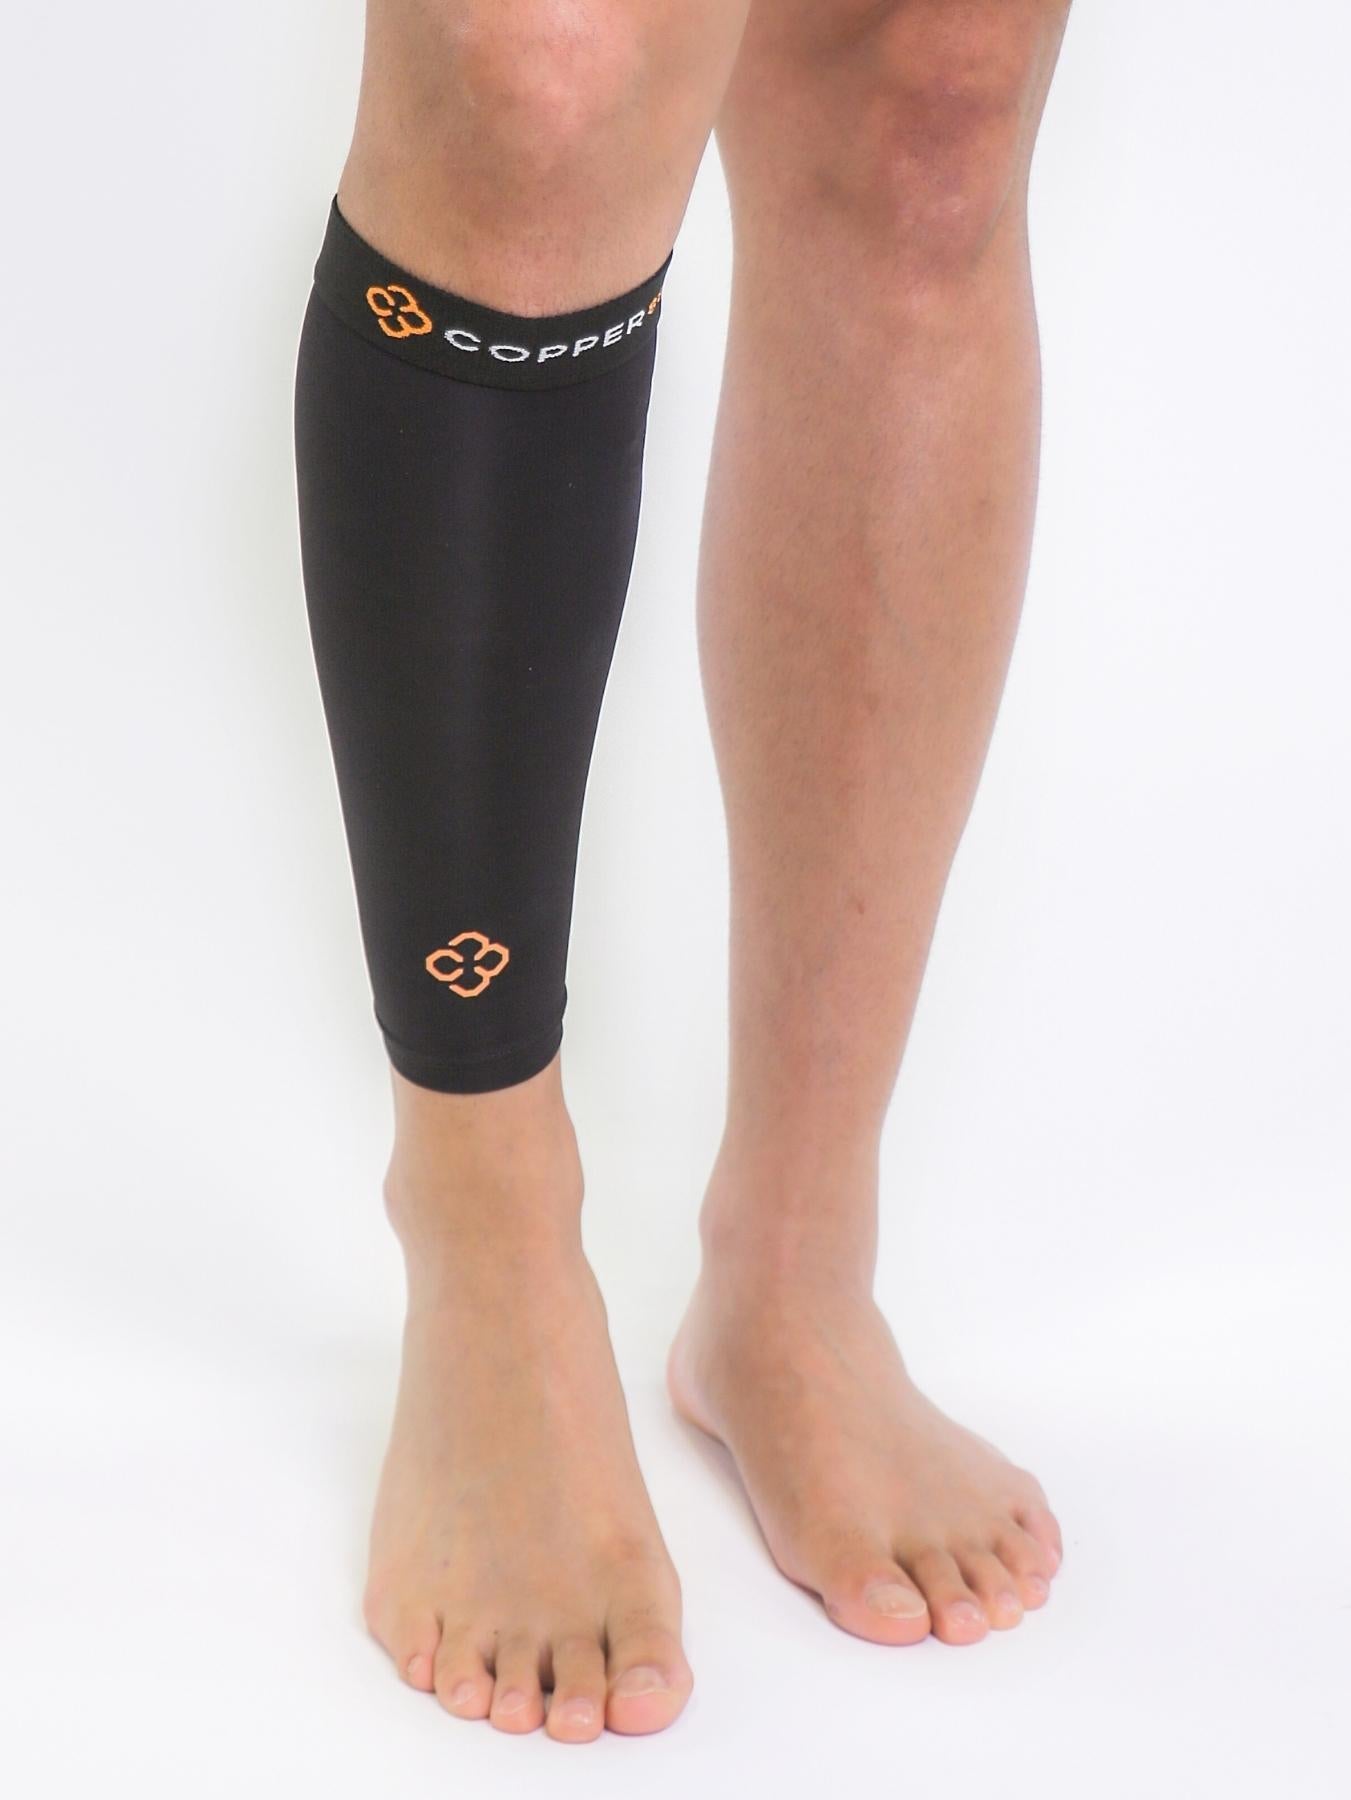 Buy Copper Compression Calf / Shin Splint Recovery Leg Sleeves